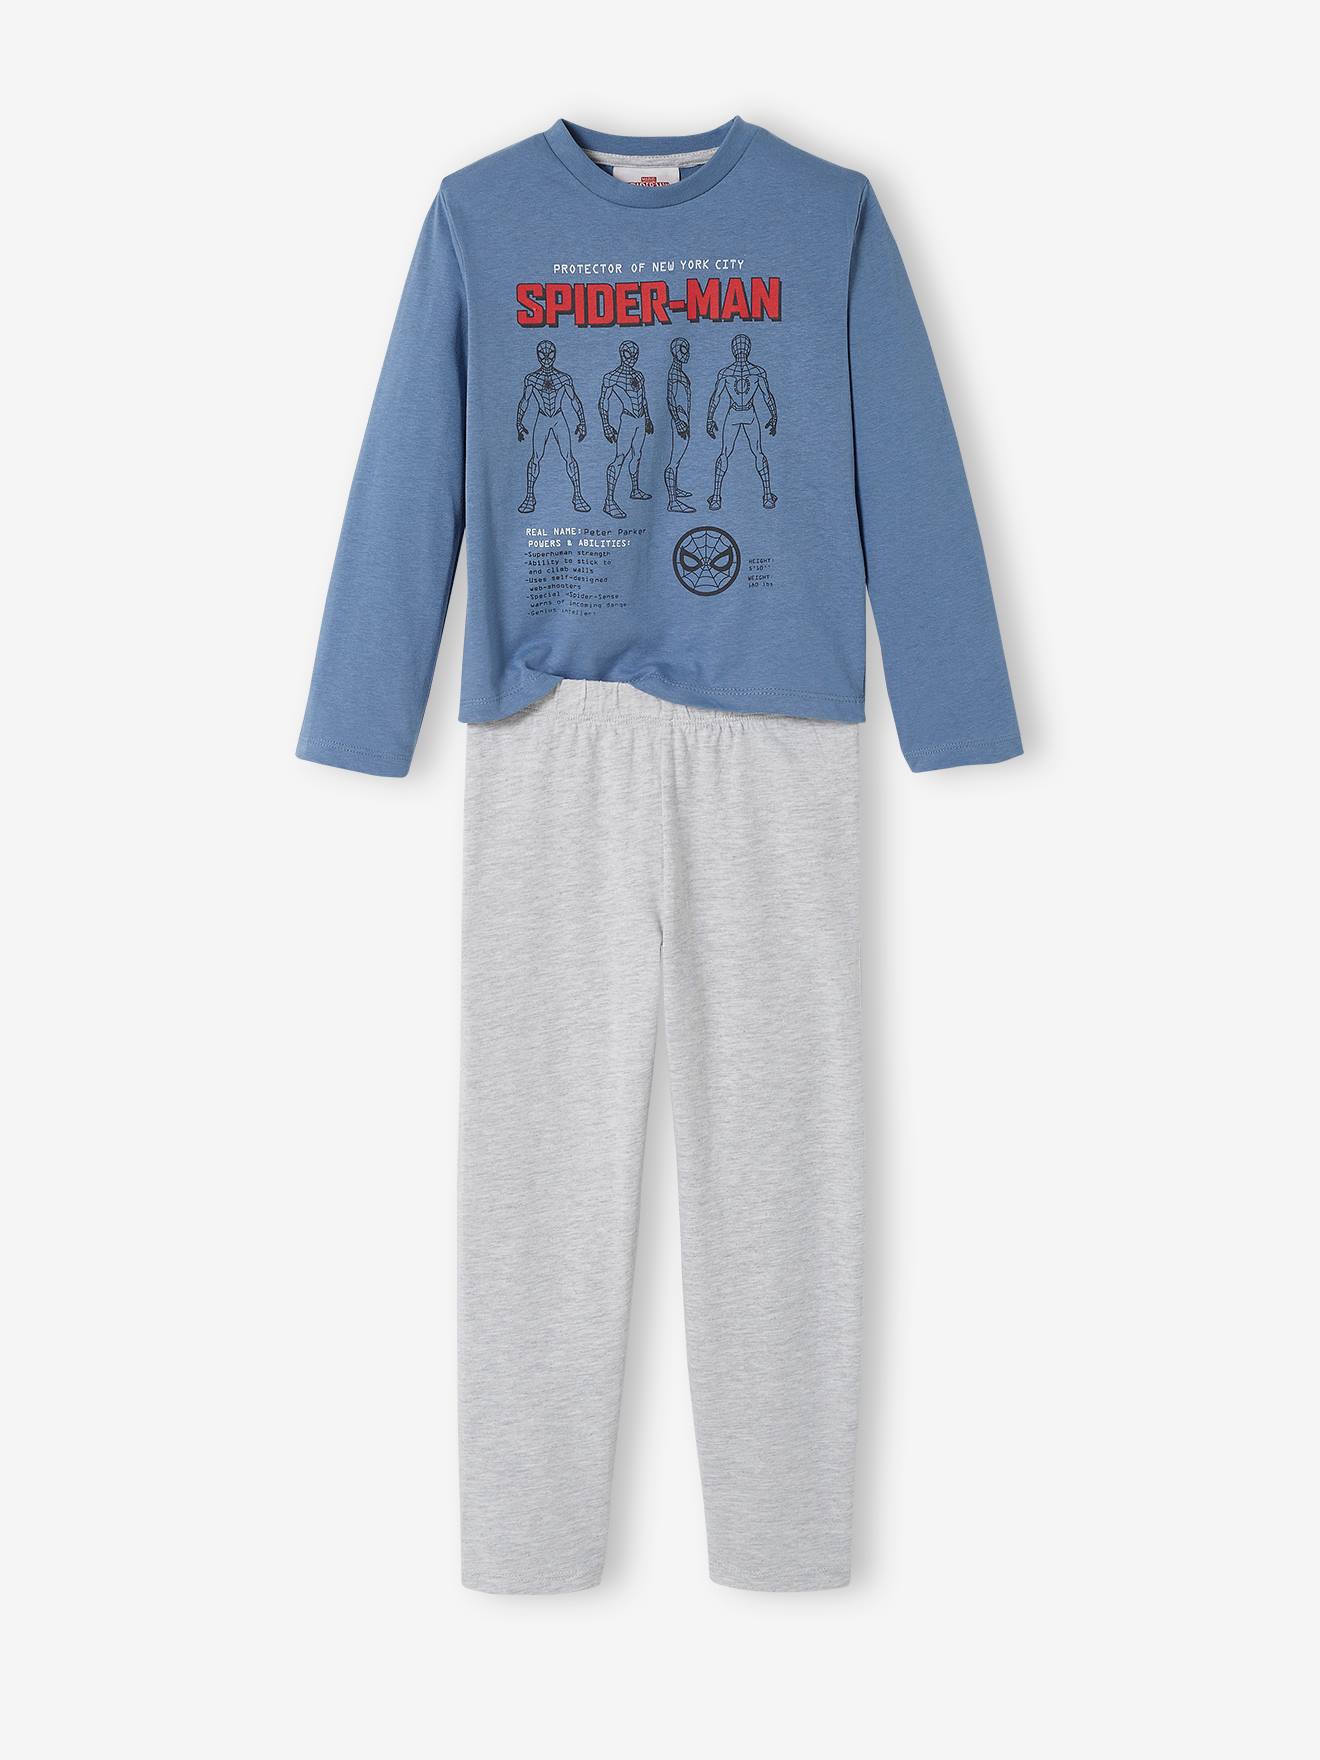 Antibiotica Slordig aanraken Pyjamas for Boys, Spiderman by Marvel® - blue dark solid with design, Boys